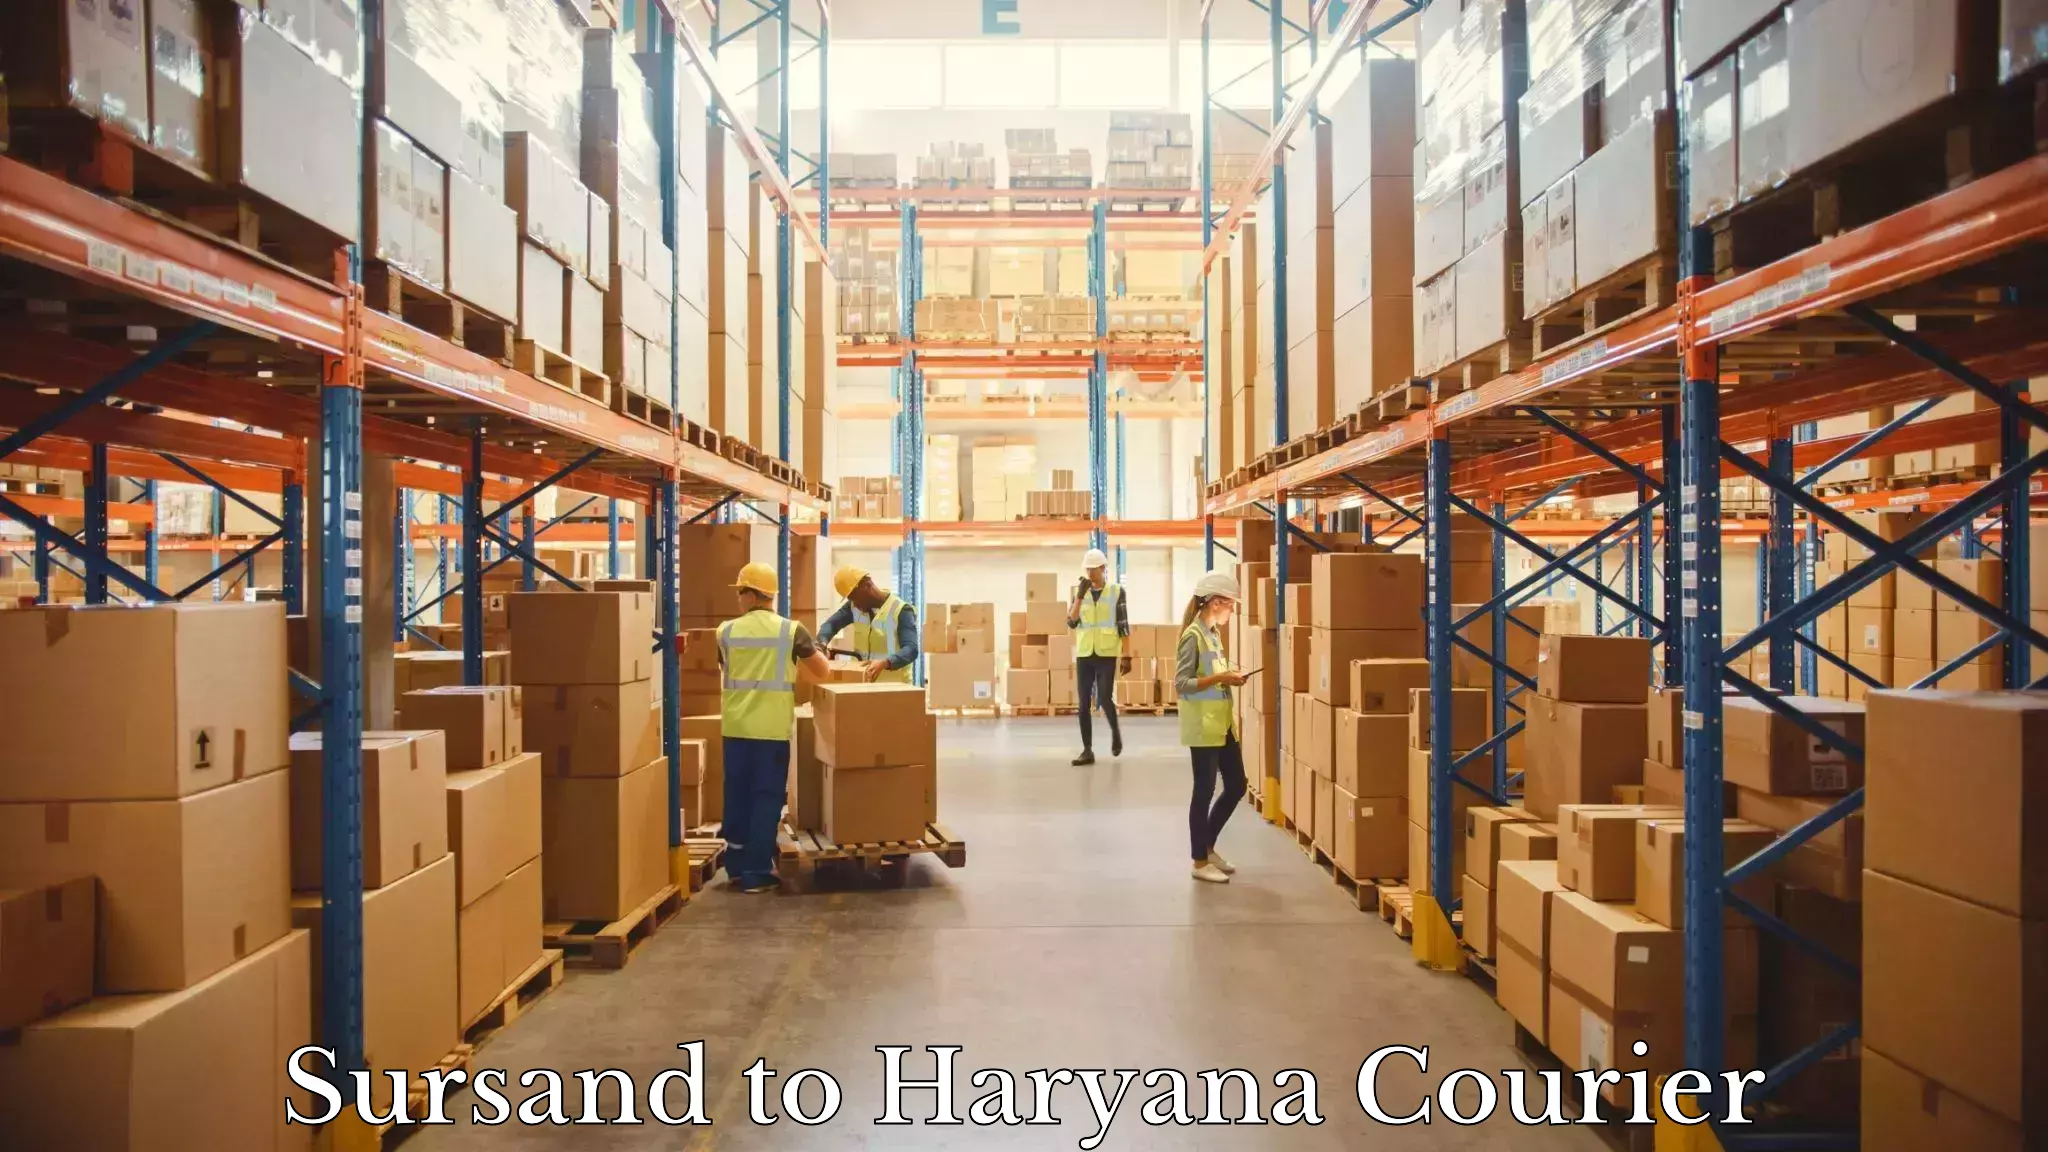 Courier service partnerships Sursand to NCR Haryana